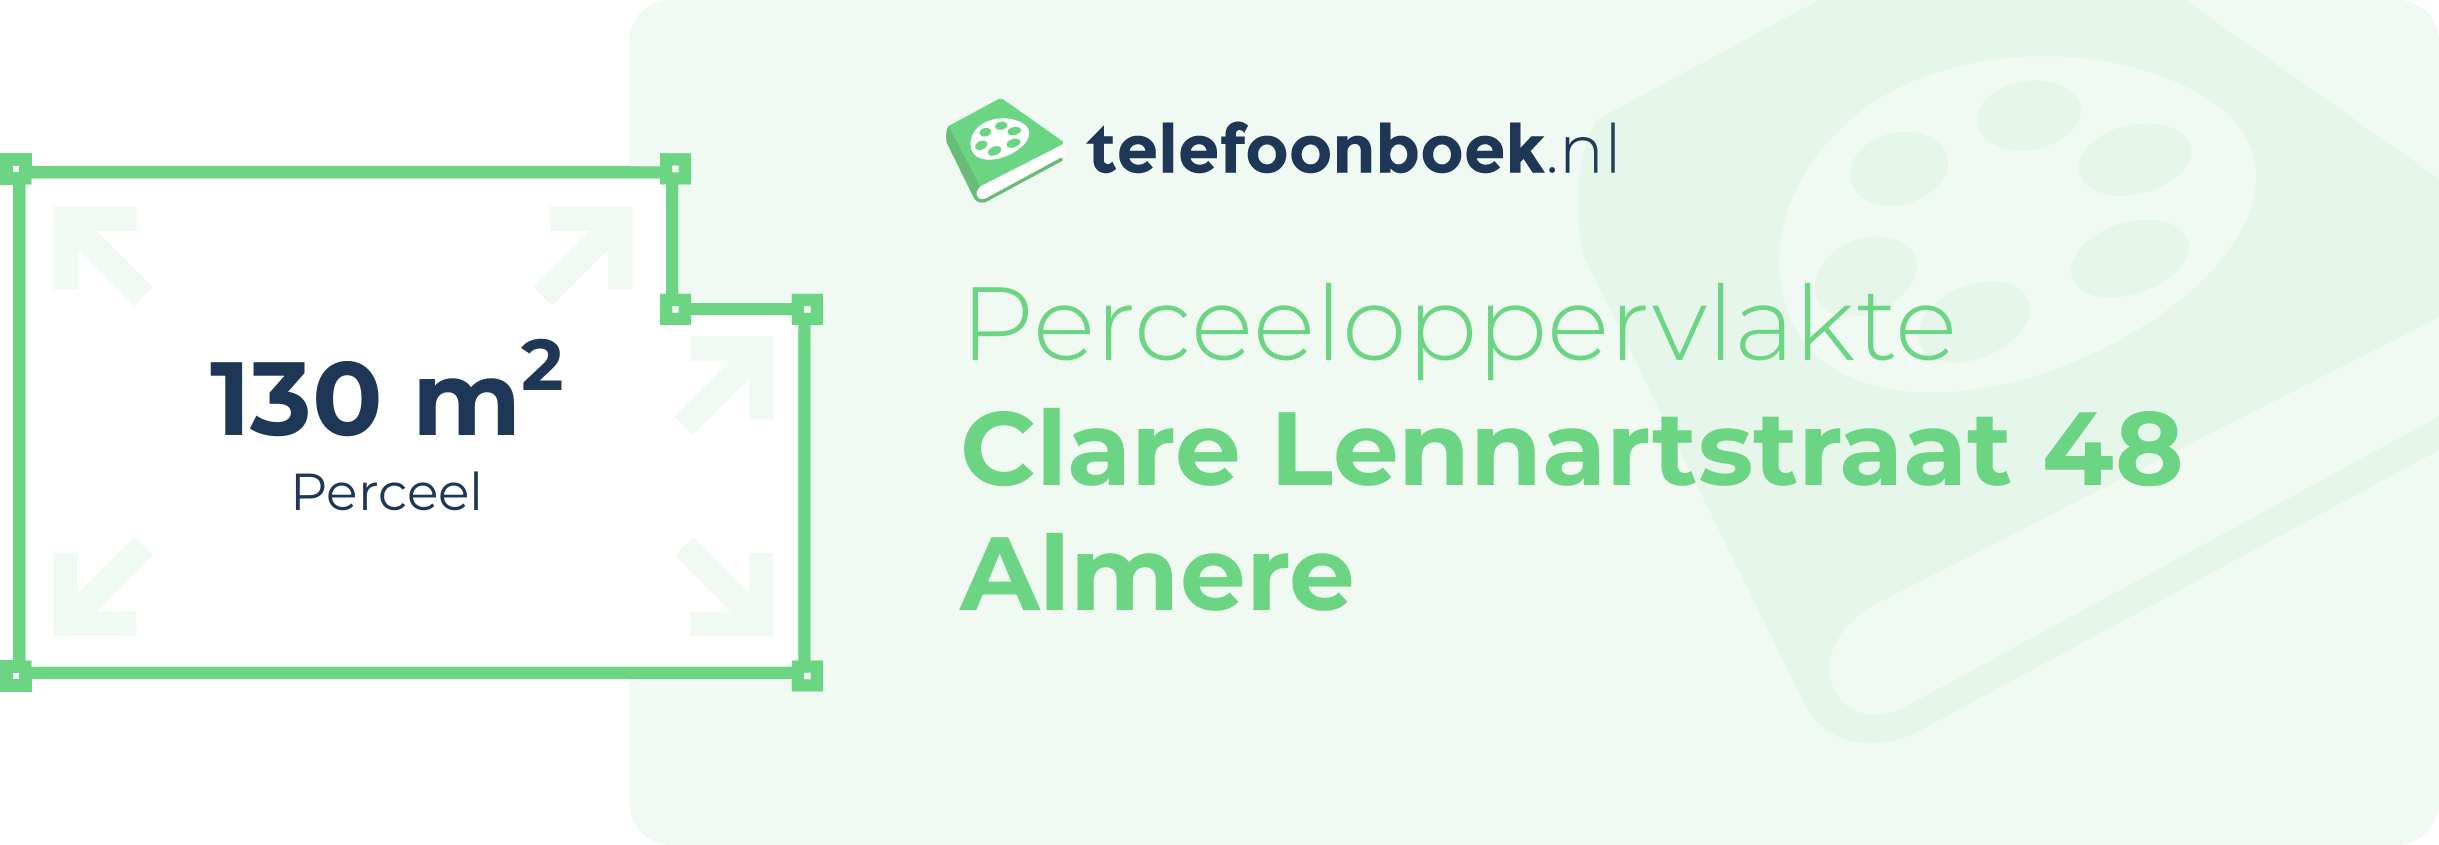 Perceeloppervlakte Clare Lennartstraat 48 Almere